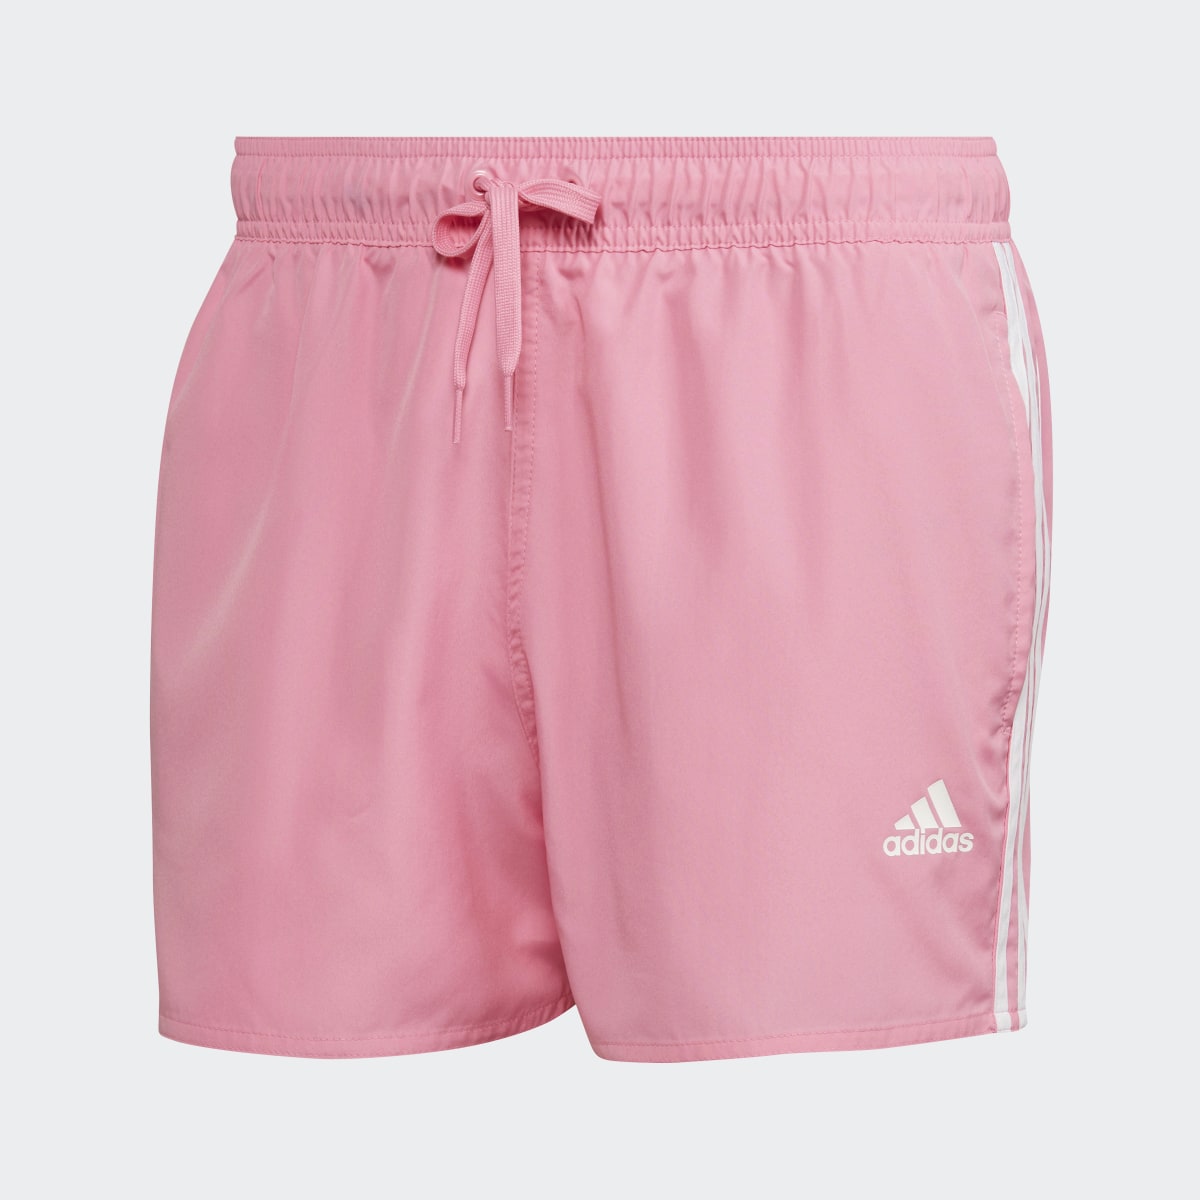 Adidas Classic 3-Stripes Swim Shorts. 4